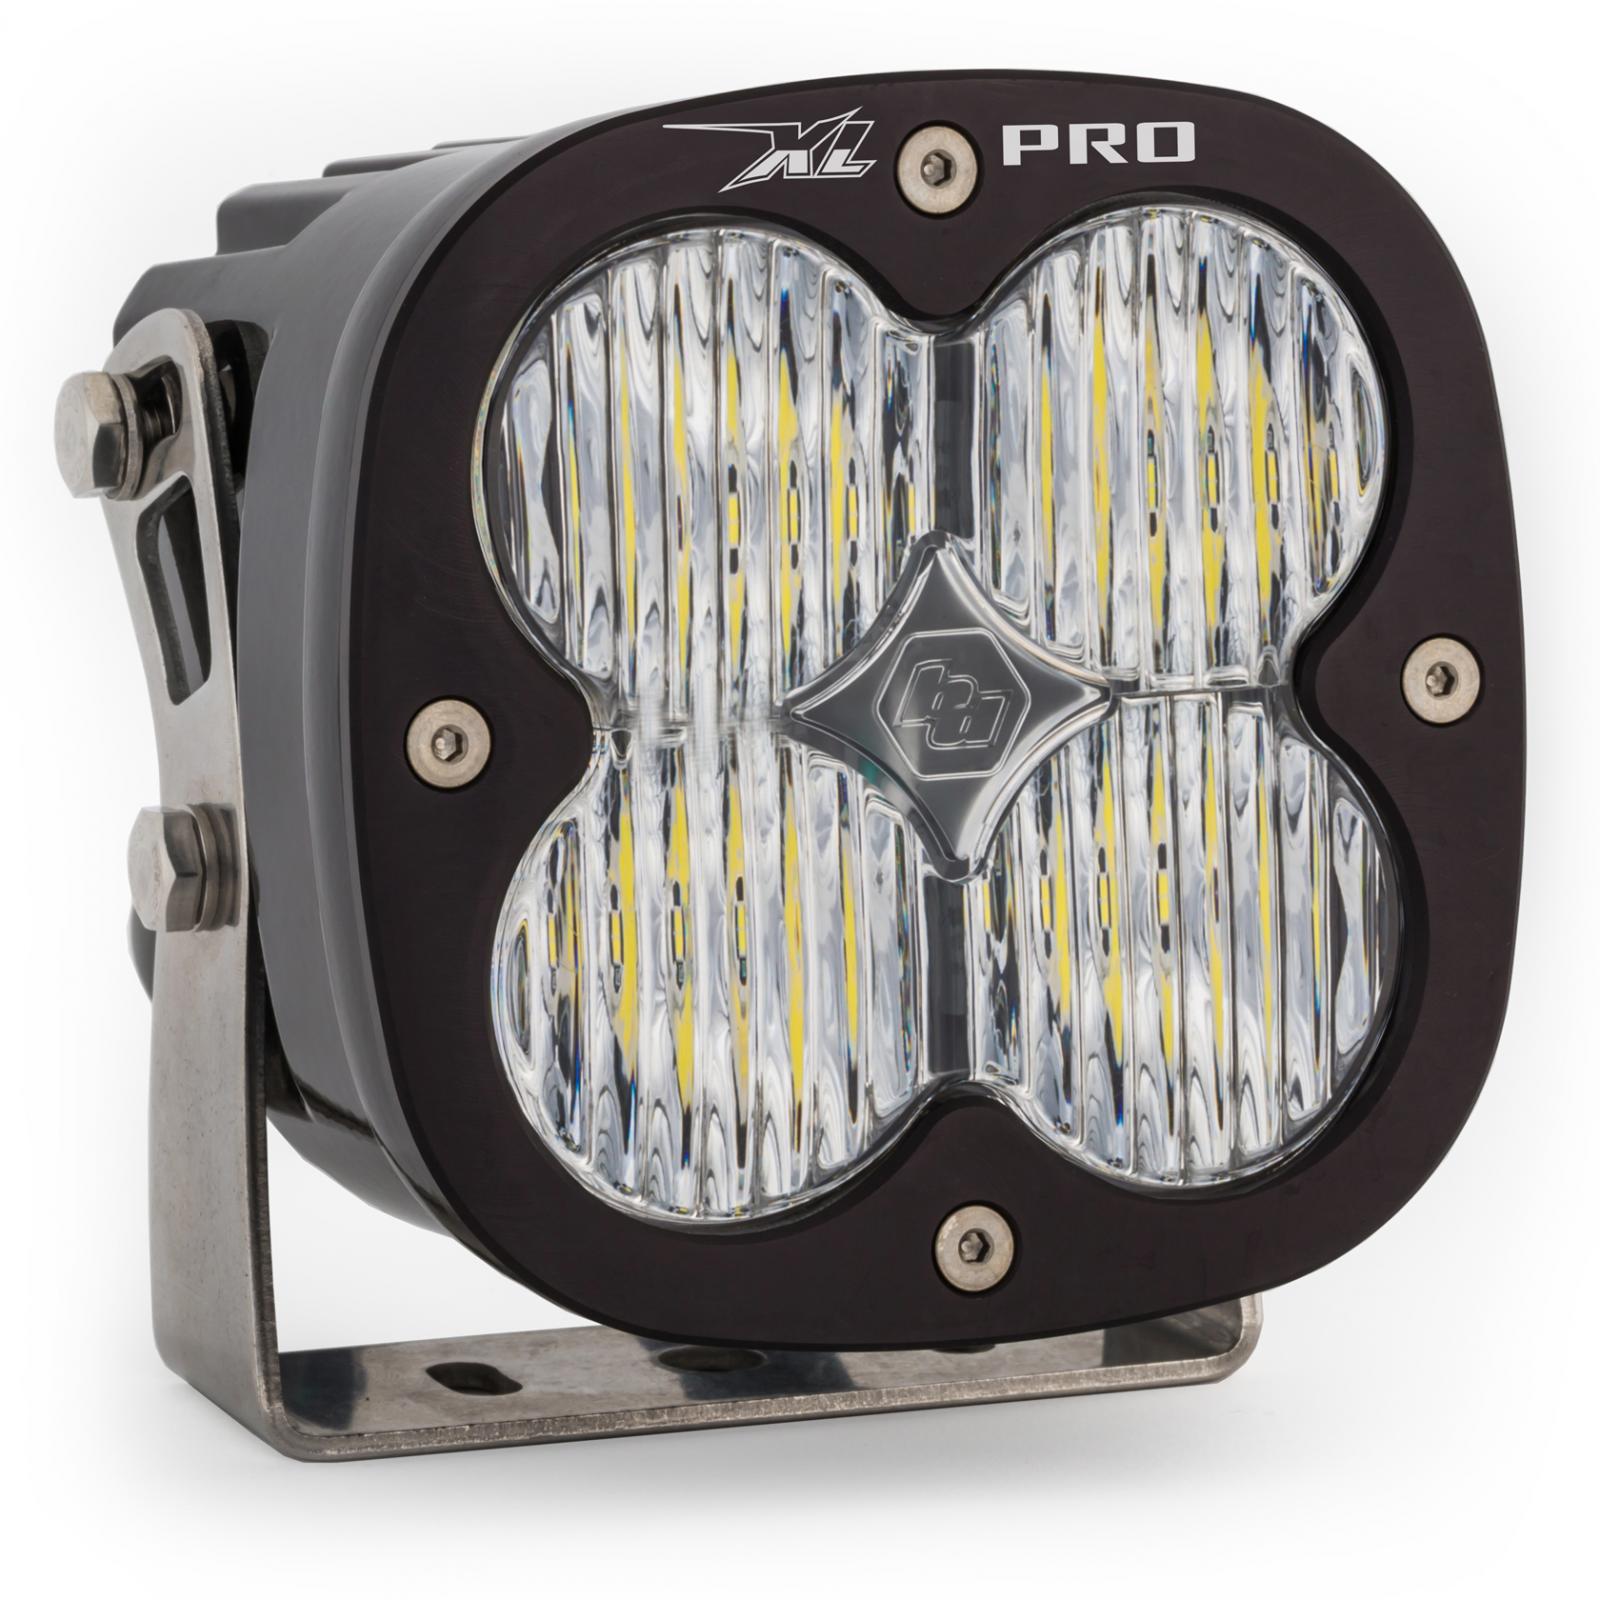 LED Light Pods Clear Lens Spot Each XL Pro Wide Cornering Baja Designs